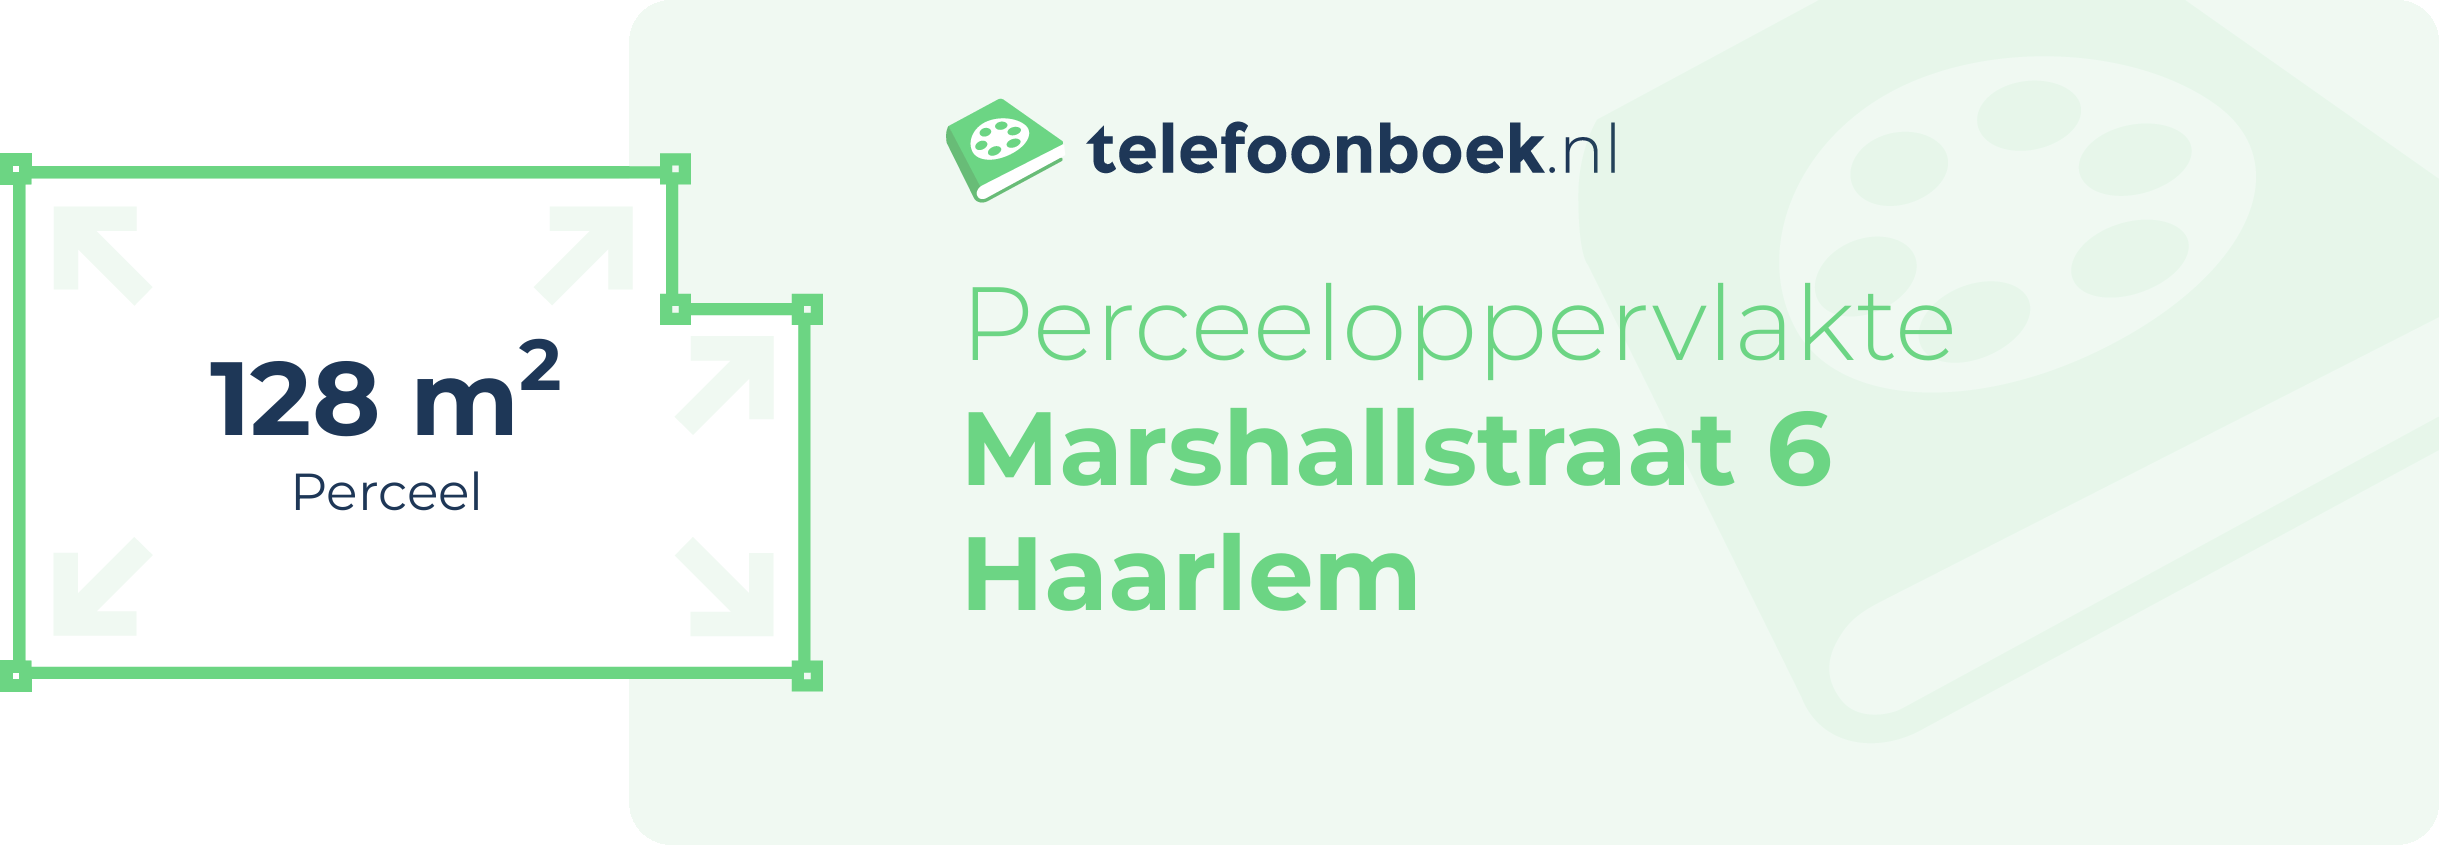 Perceeloppervlakte Marshallstraat 6 Haarlem